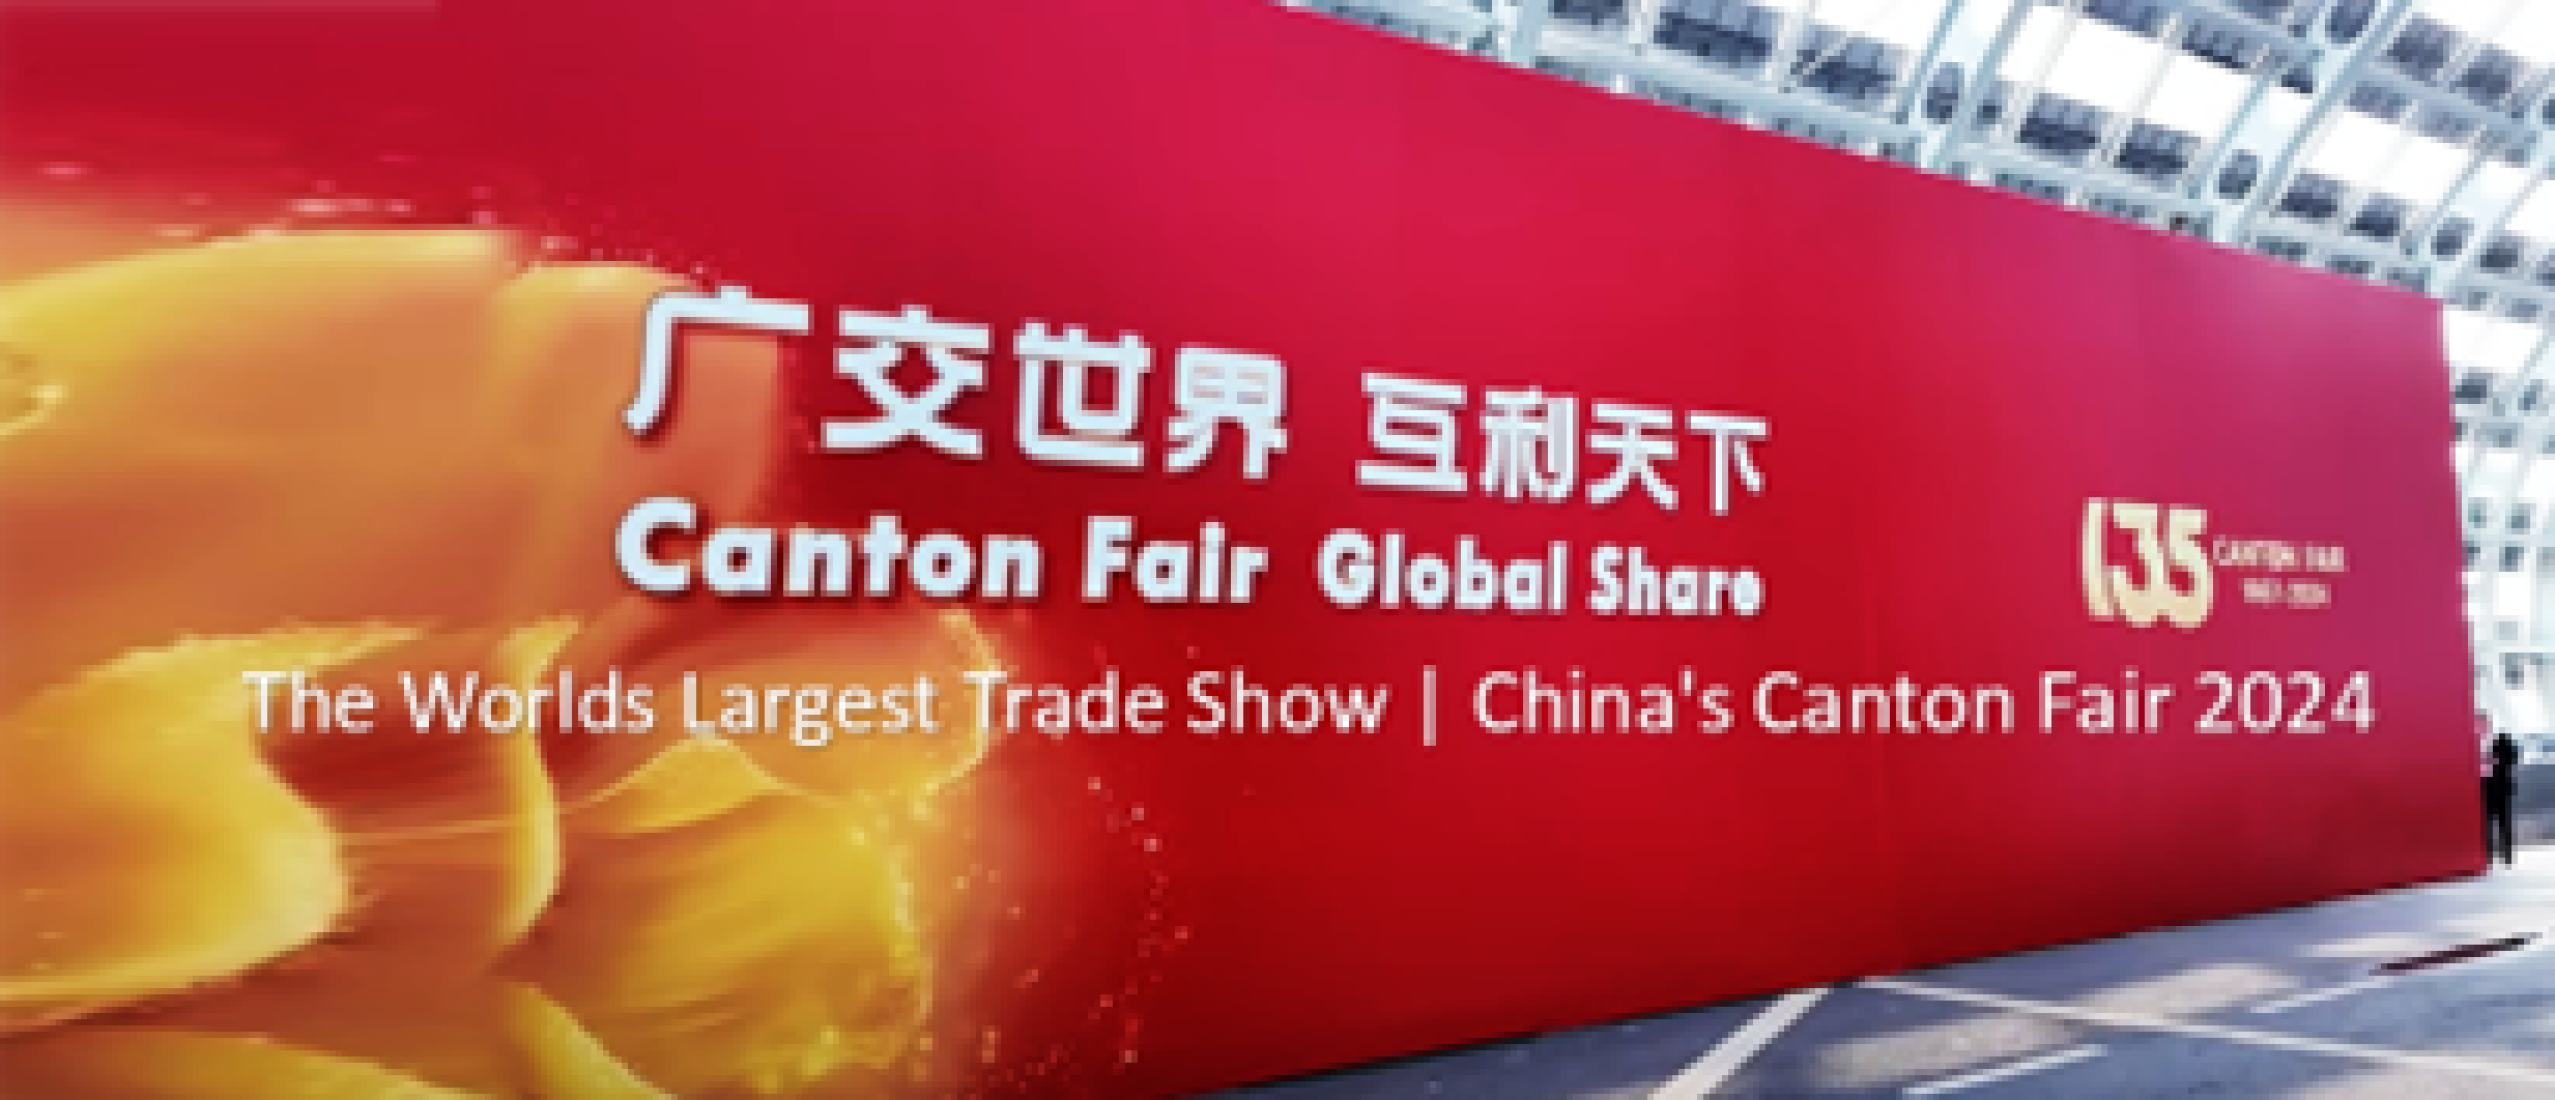 China Canton Fair 2024 - global buyers surge